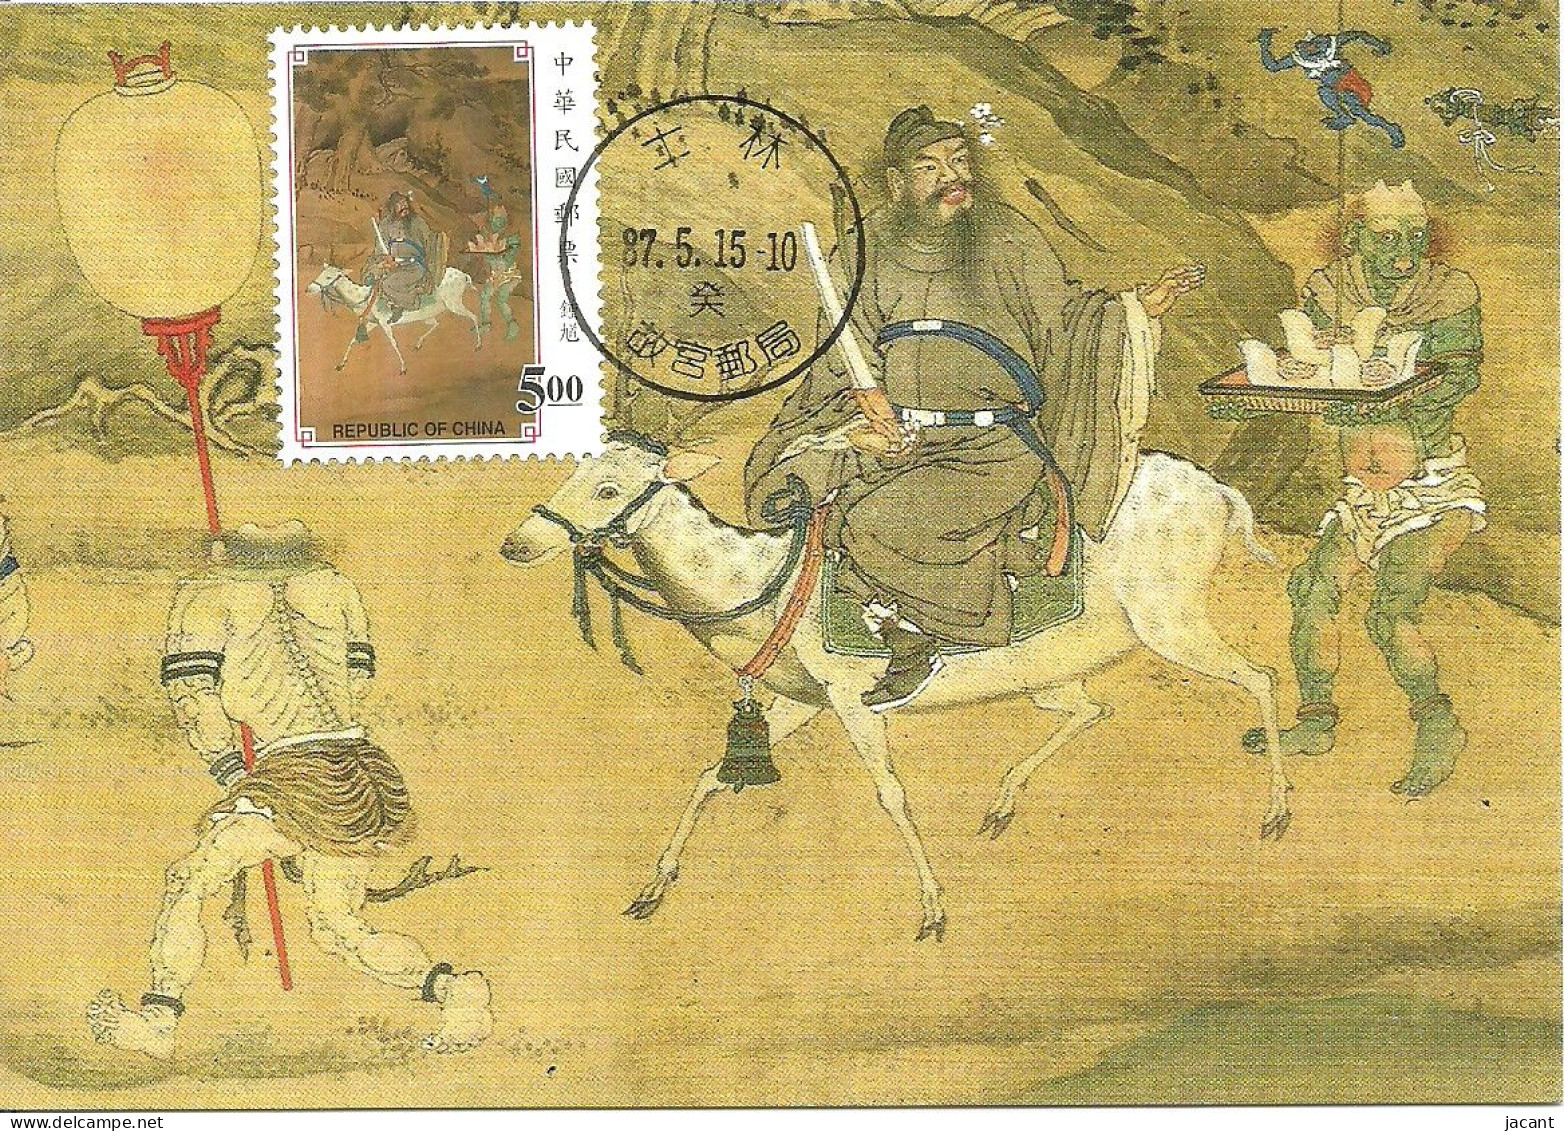 Carte Maximum - Taiwan - Formose - Set Of 2 Cards - Ancient Painting "Portrait Of Chung K'uei" - National Palace Museum - Tarjetas – Máxima